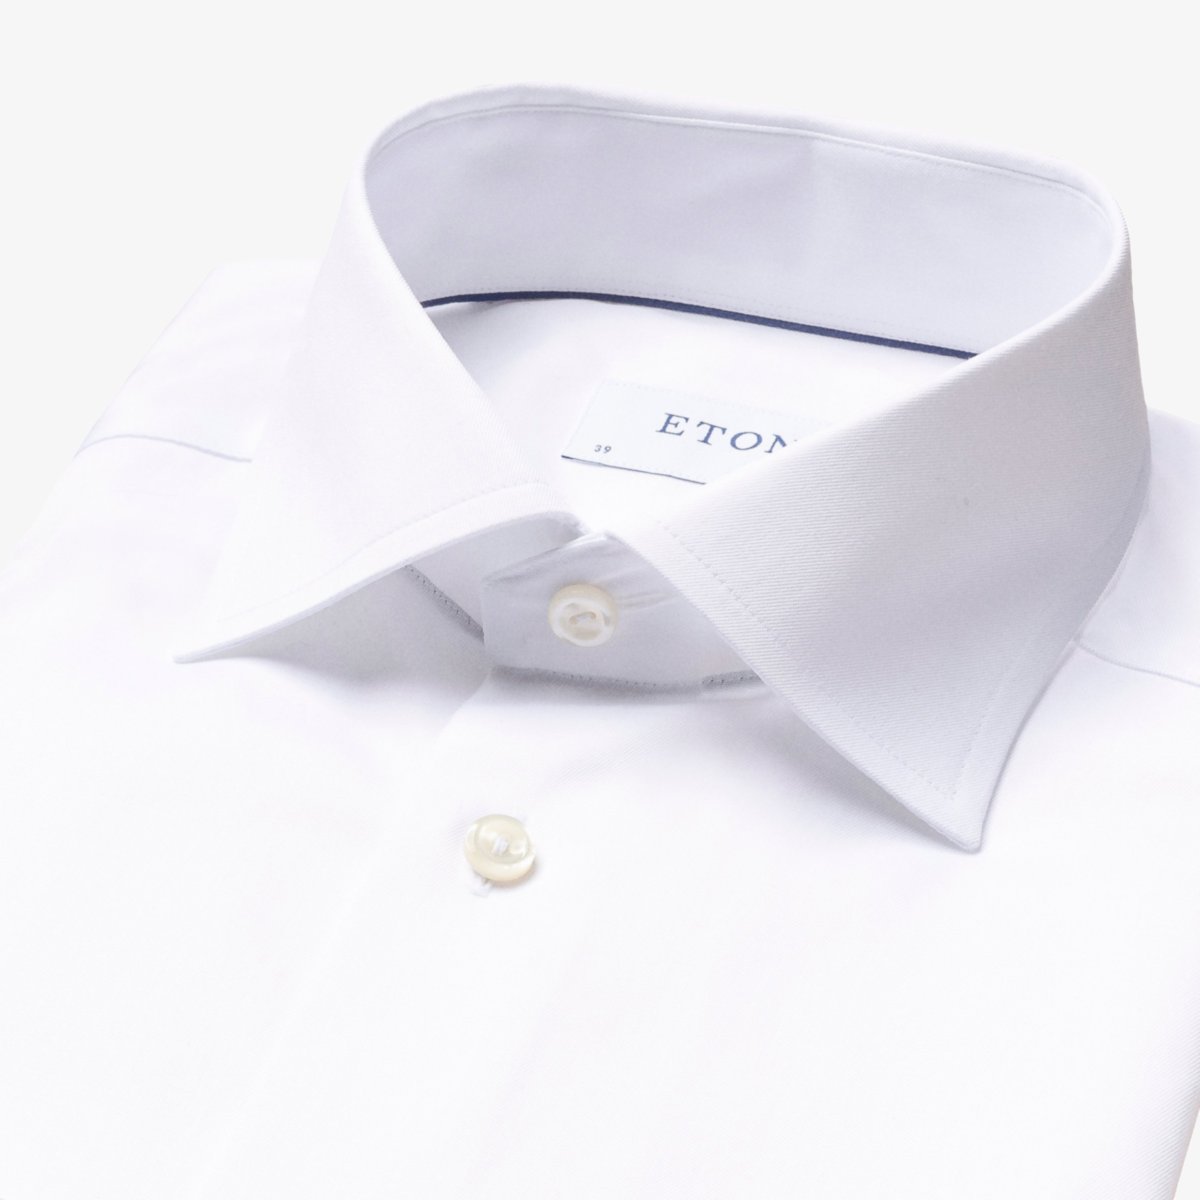 Eton white slim fit signature twill men's dress shirt